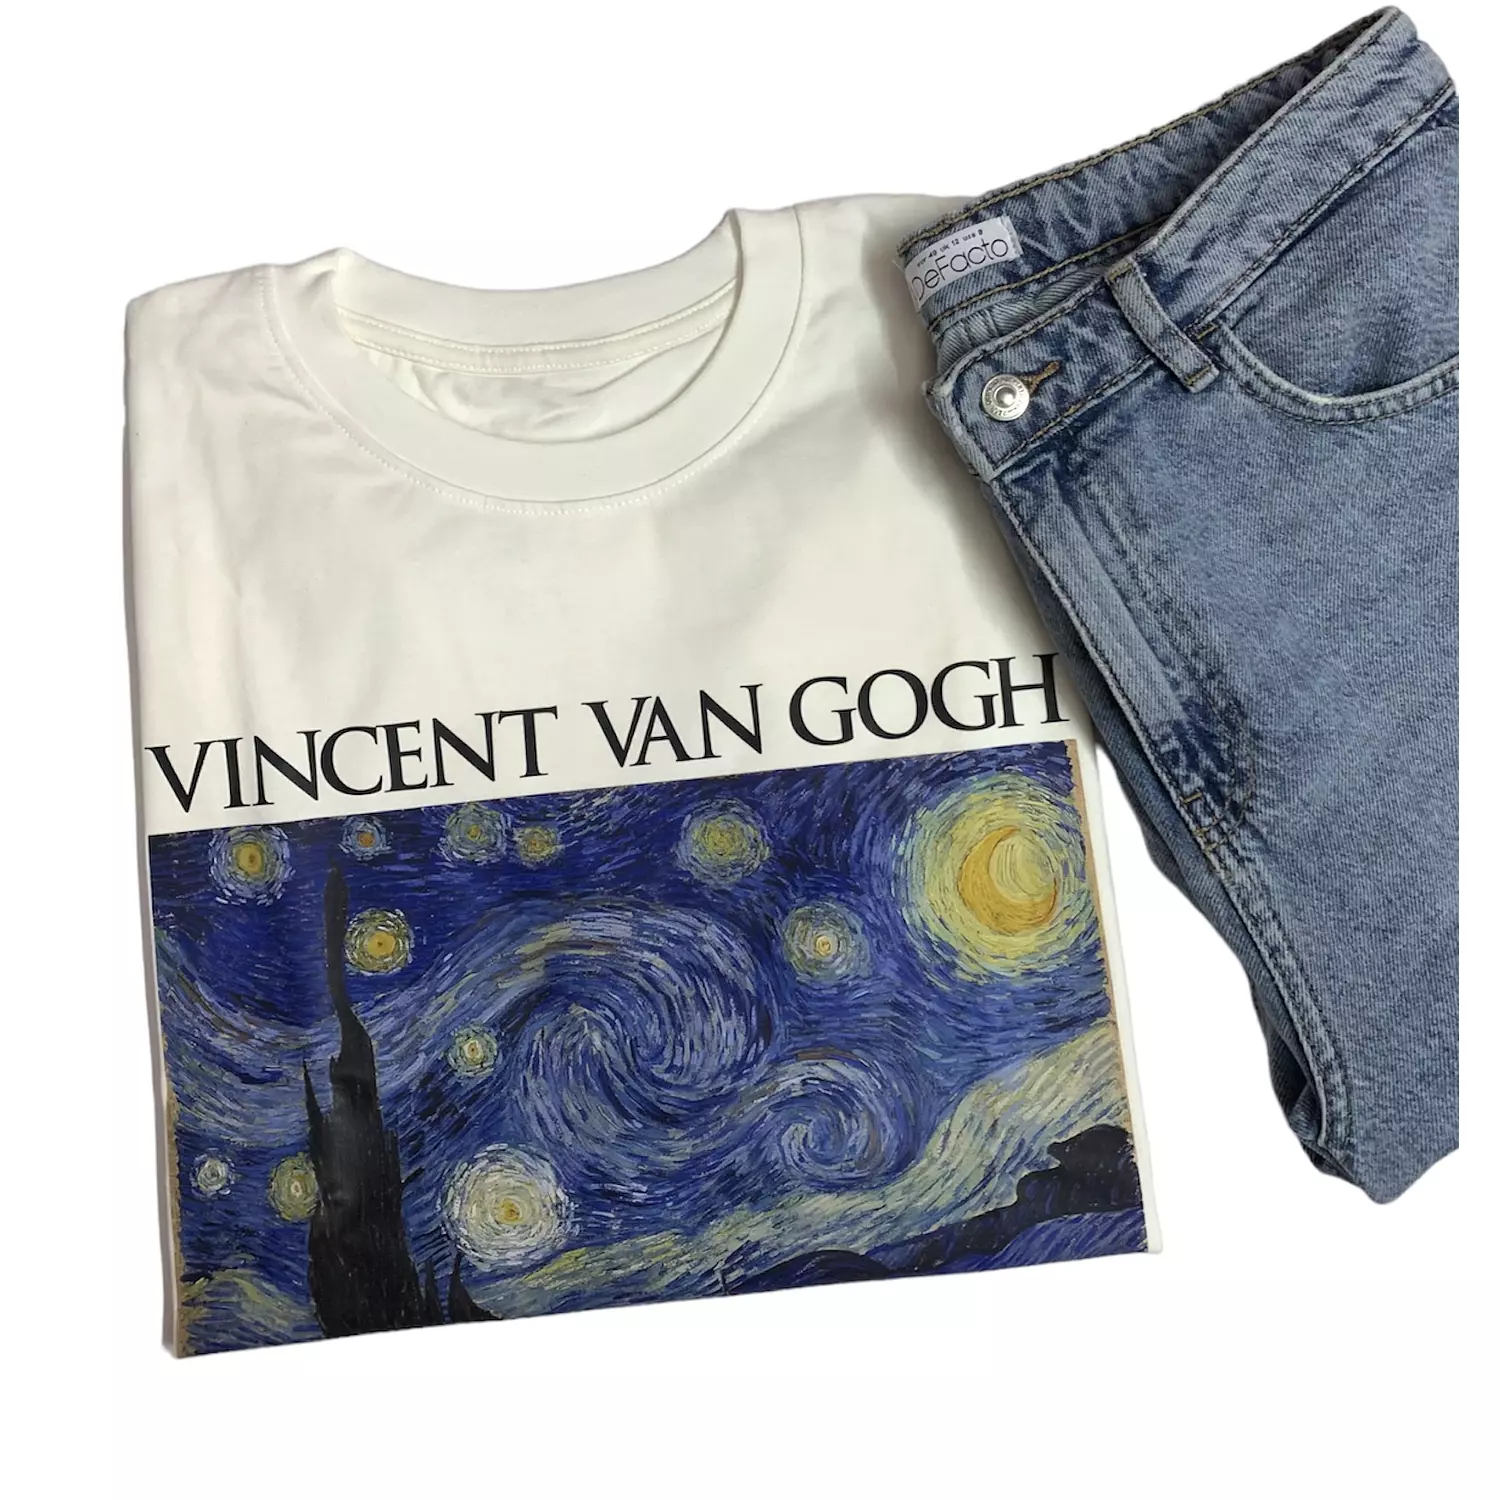 Van Gogh White T-shirt hover image